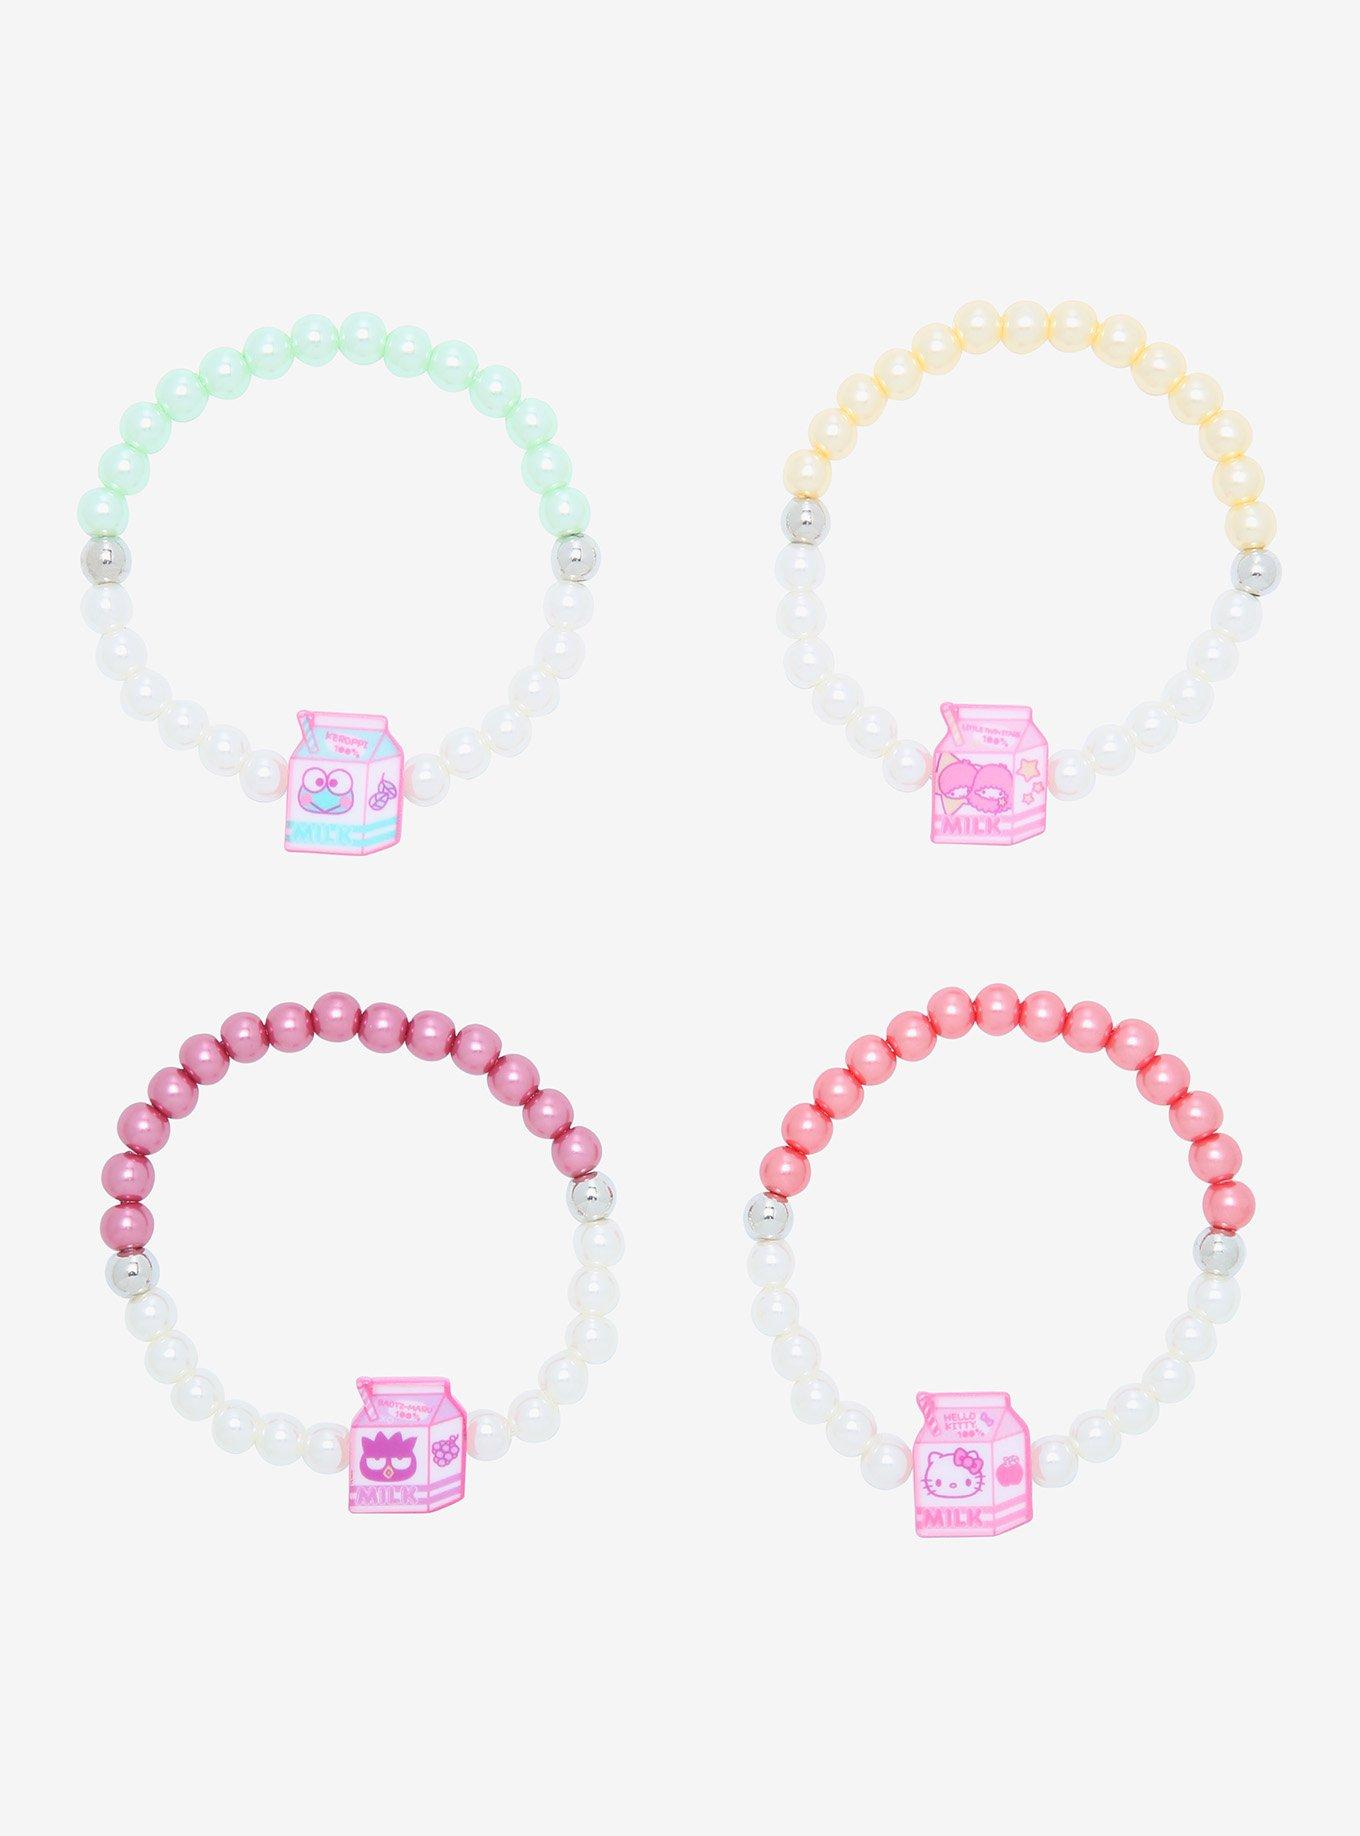 Hello Kitty Faux Pearl Charm Bracelet